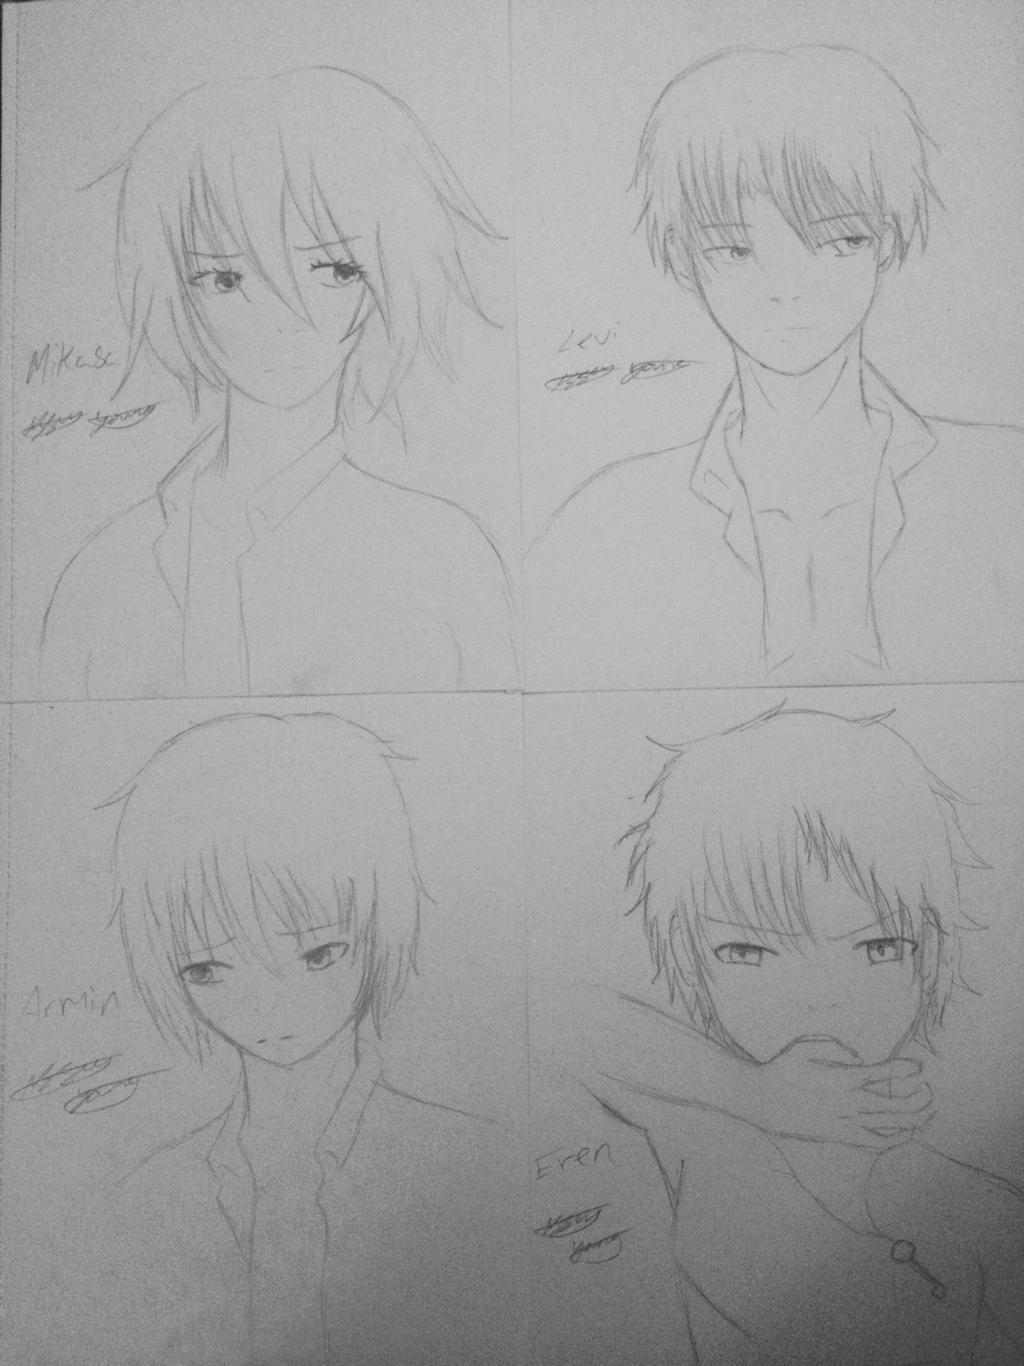 Mikasa, Levi, Armin and Eren WIP